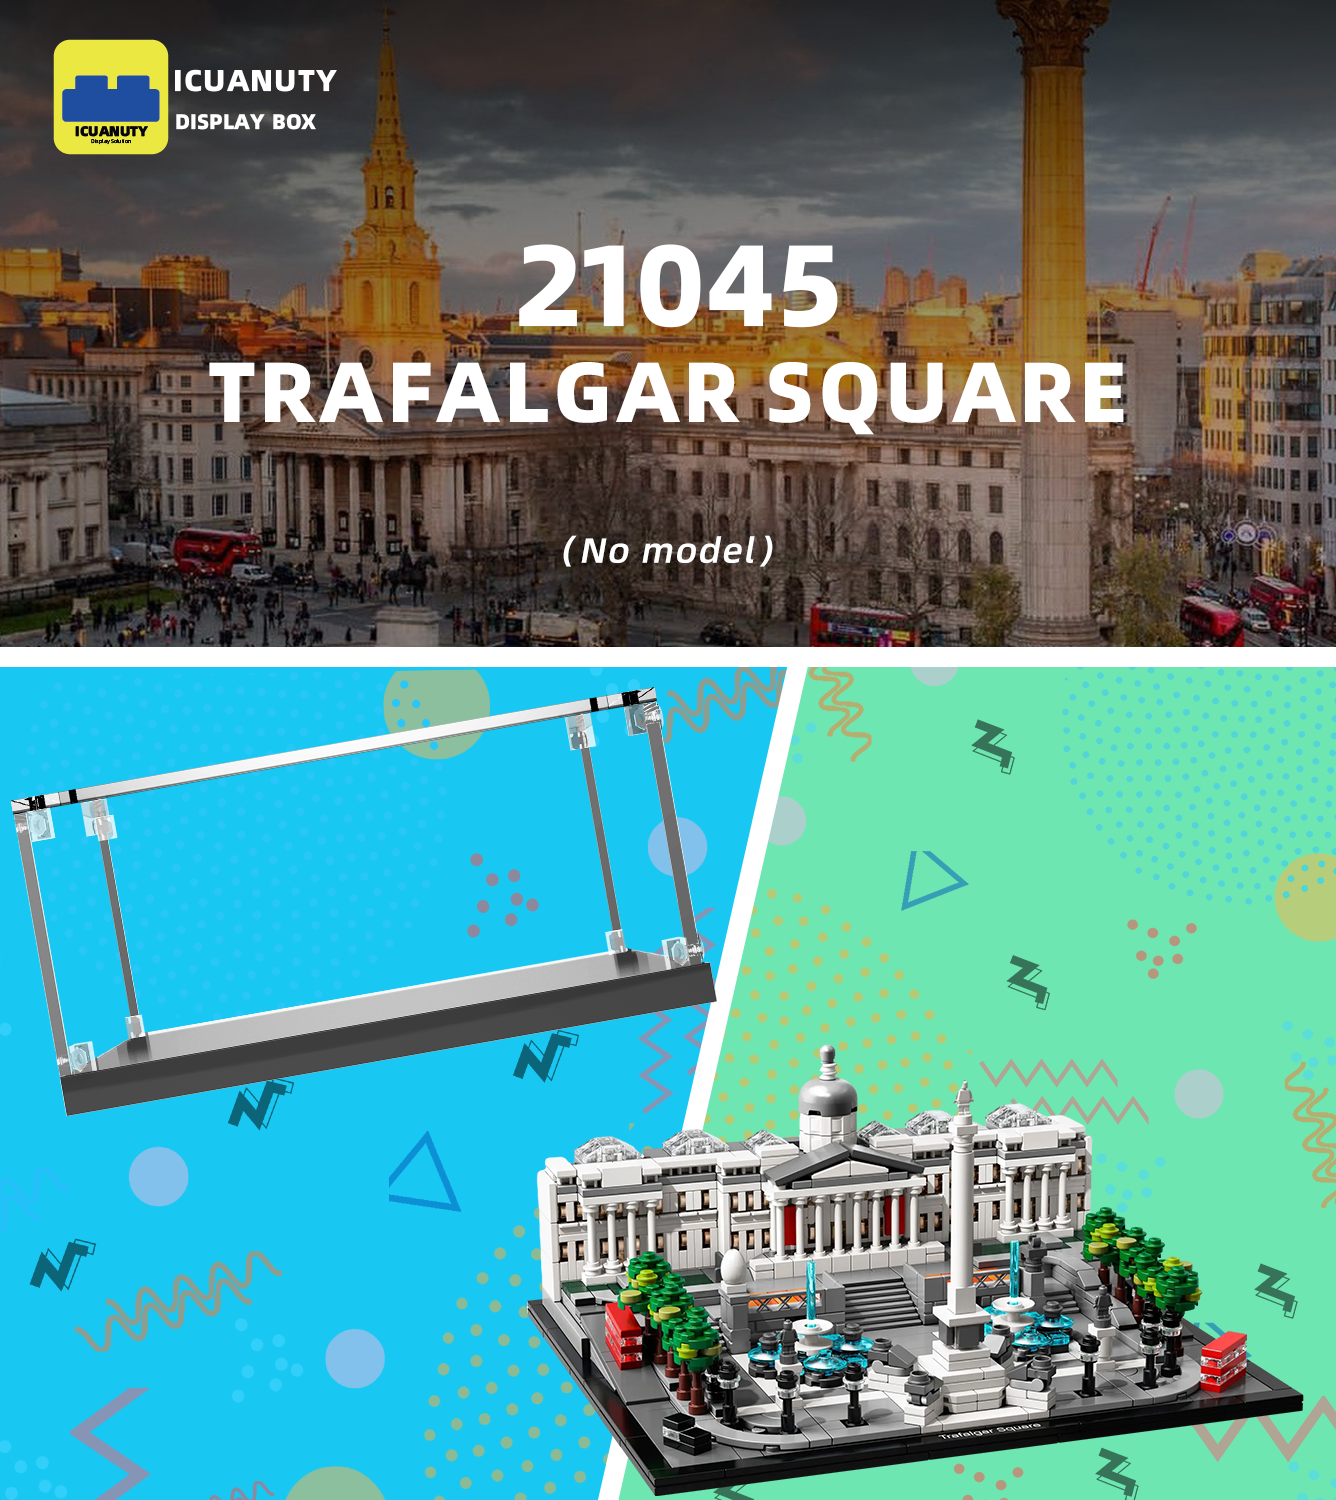 Display Case for Lego Architecture Trafalgar Square 21045